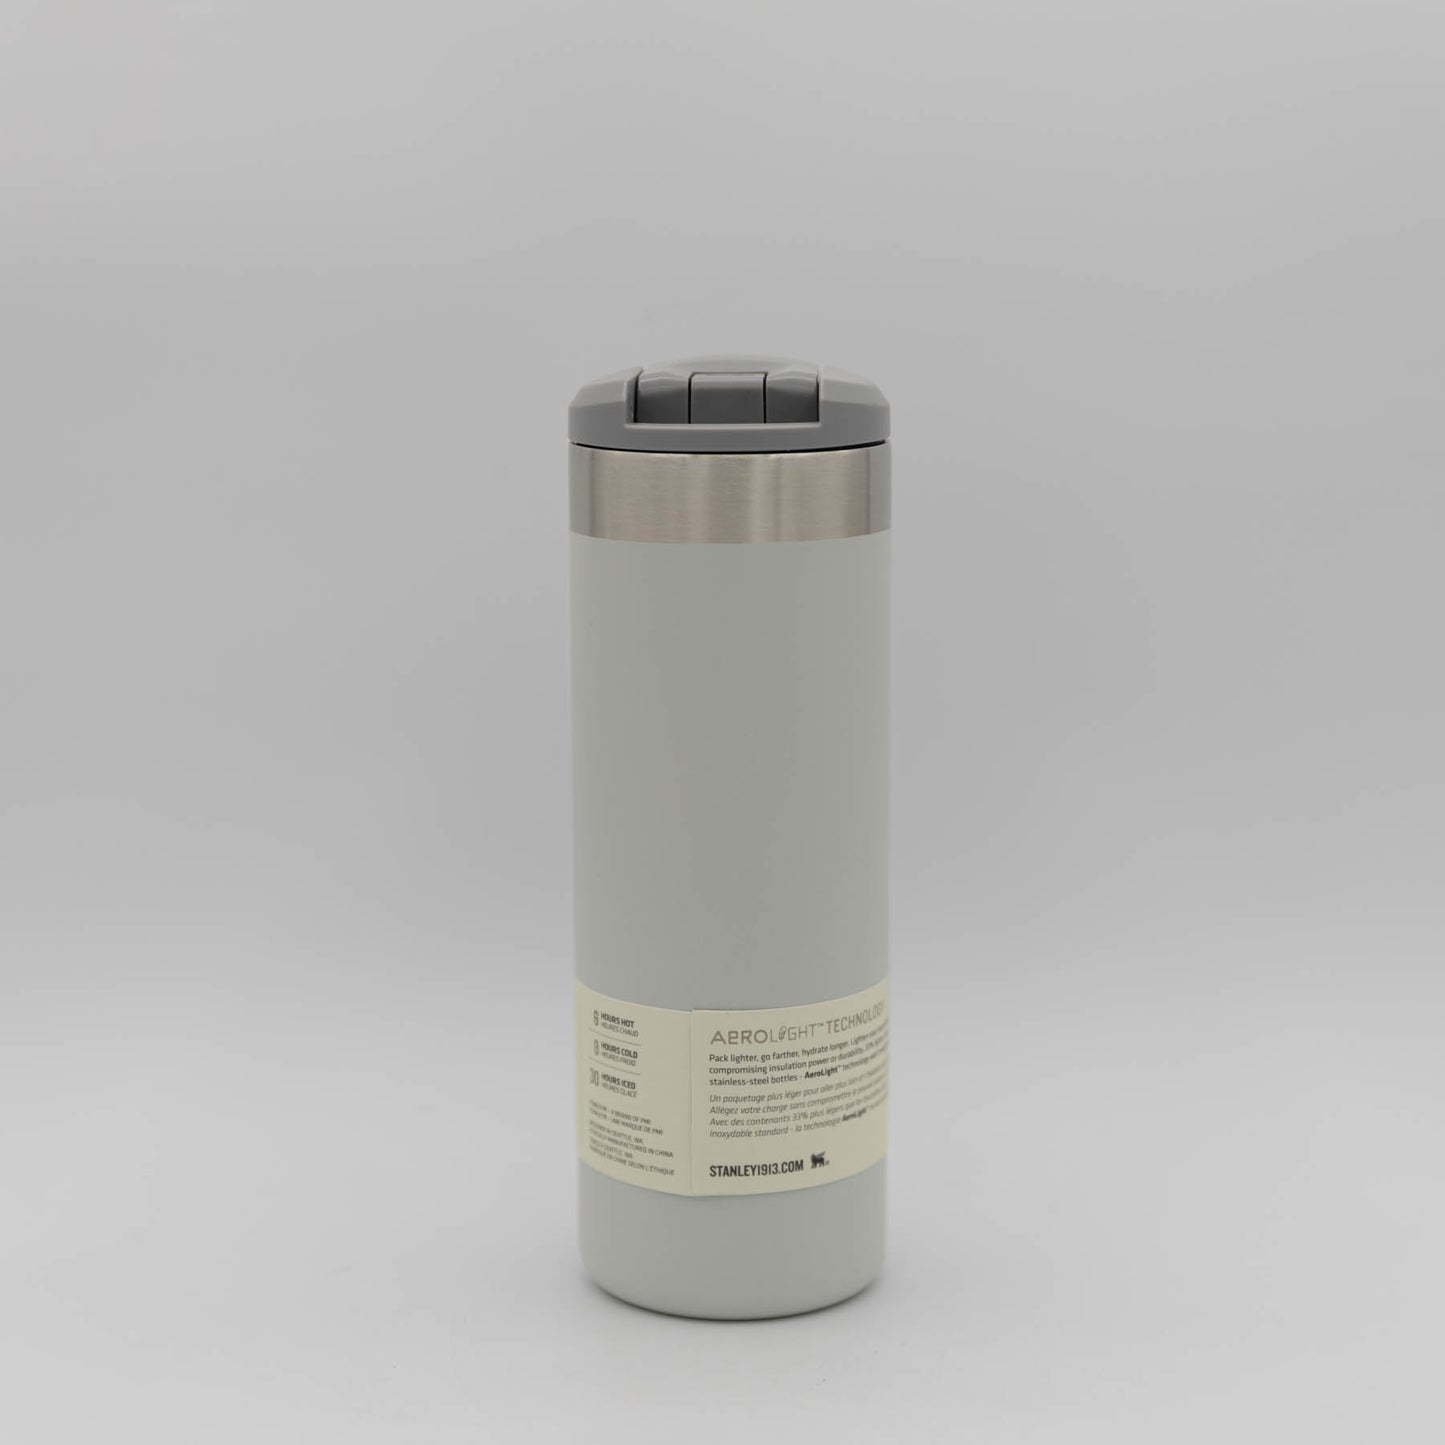 Stanley - The AeroLight™ Transit Bottle - Fog Glimmer - 16 oz / 0.47 L